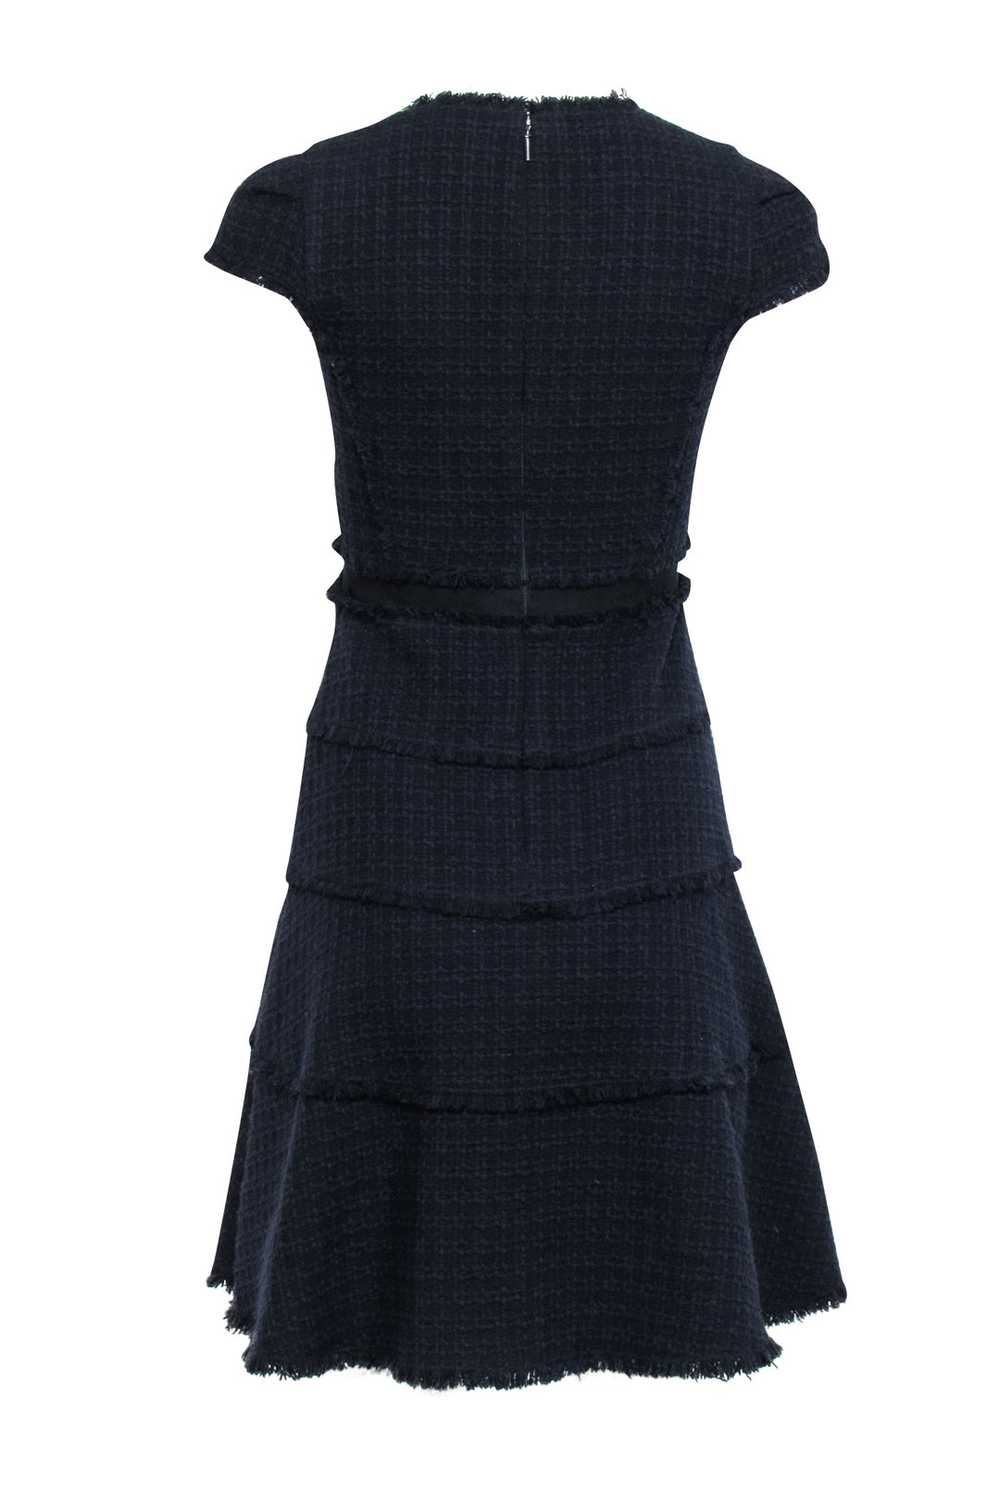 Rebecca Taylor - Navy & Black Tweed Cap Sleeve Fi… - image 3